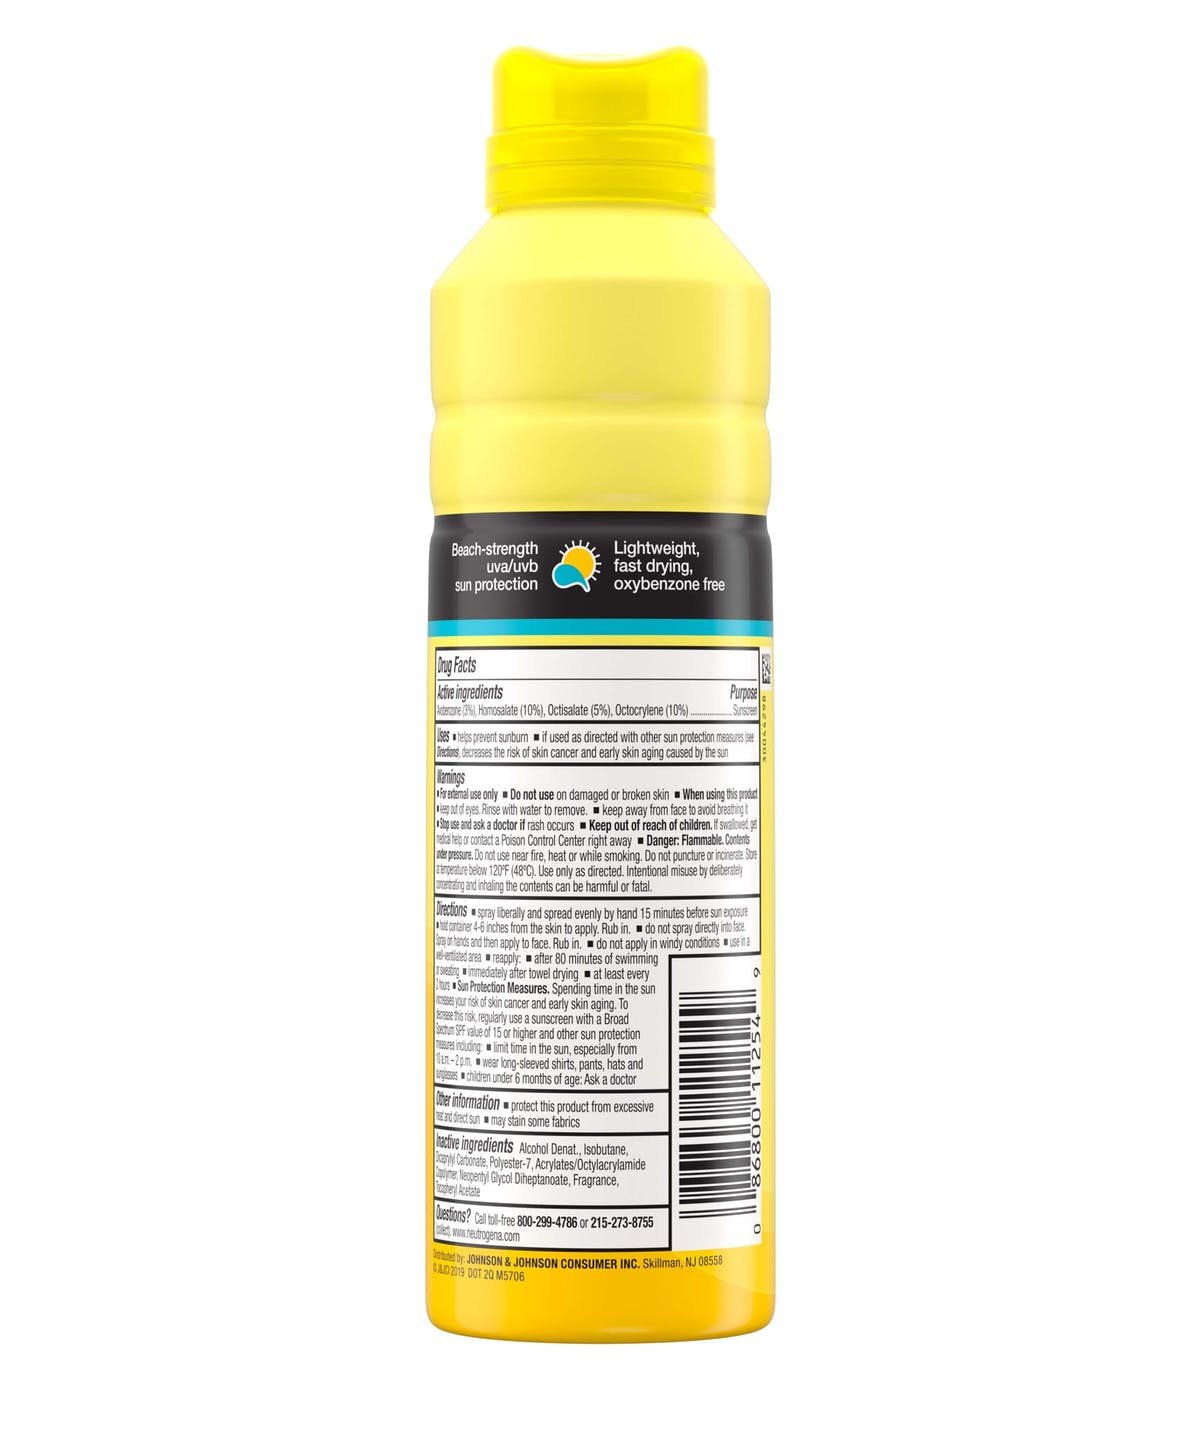 Neutrogena Beach Defense Water + Sun Protection Body Sunscreen Spray SPF 50, 6.5 oz. / 184 g